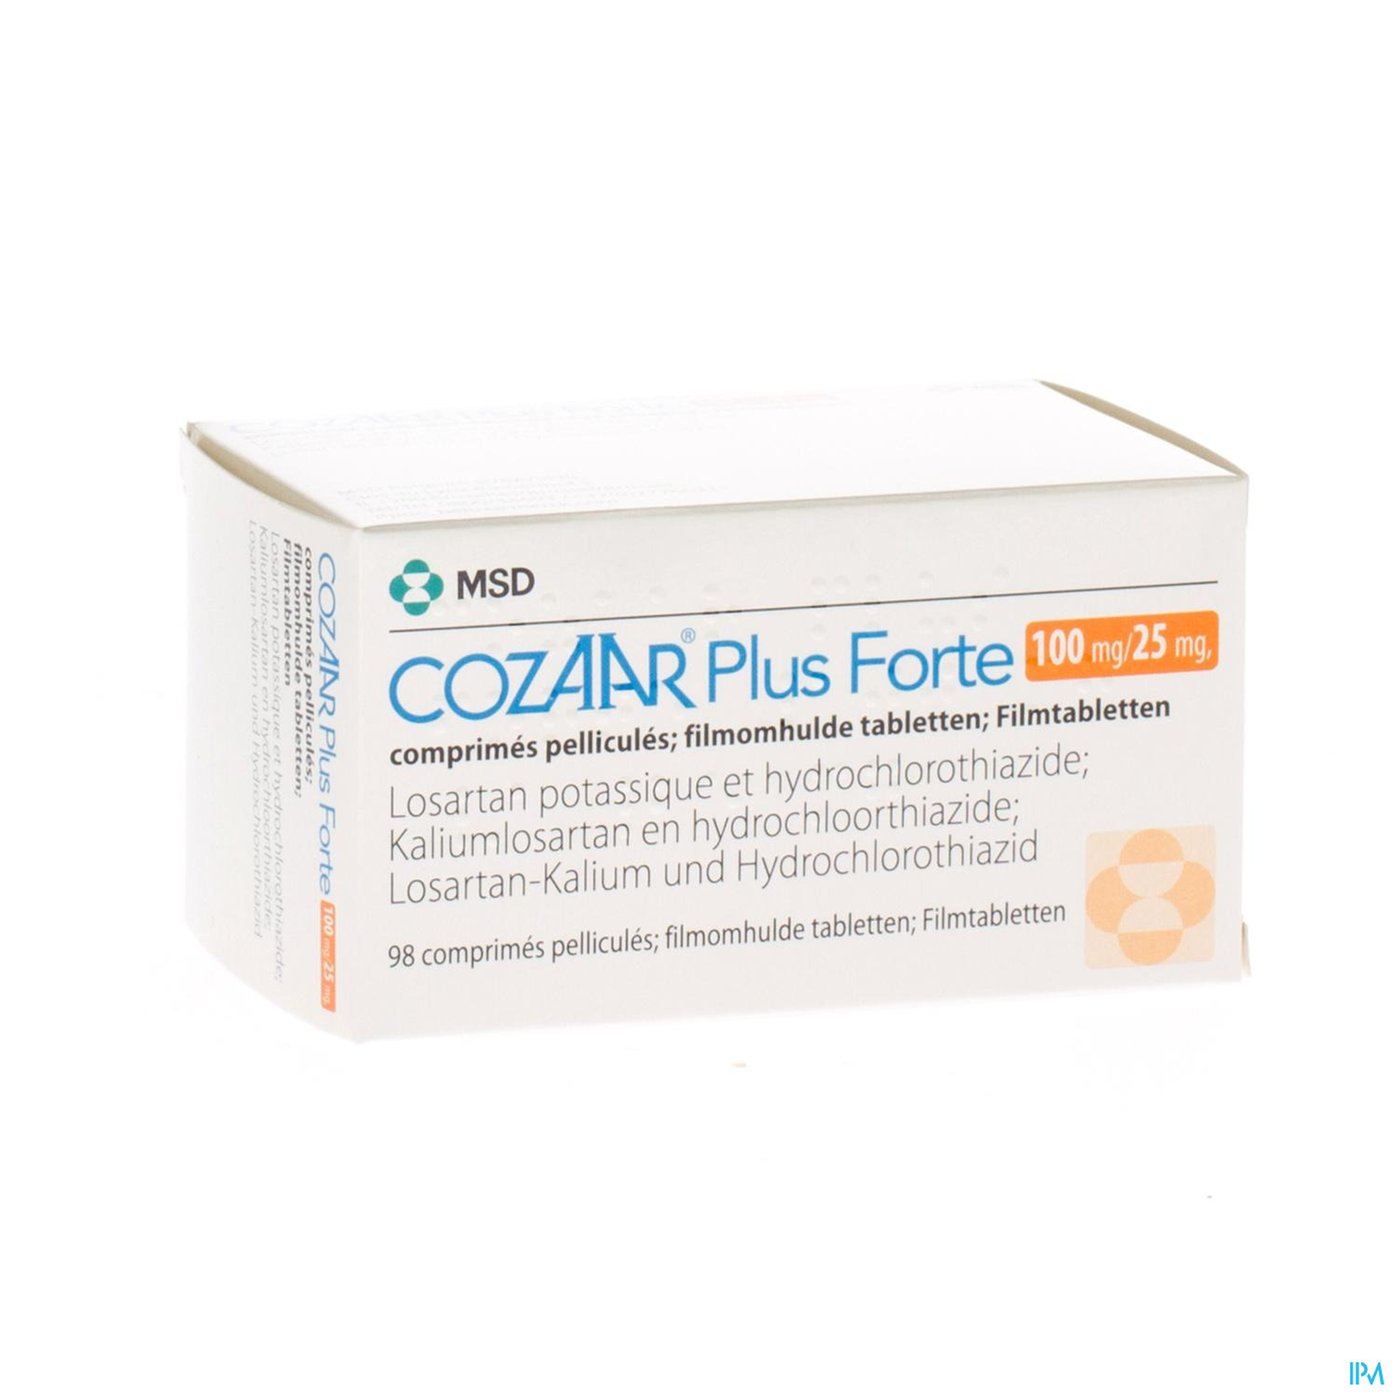 Cozaar Plus Forte 100mg/25mg Comp 98x100mg/25mg packshot